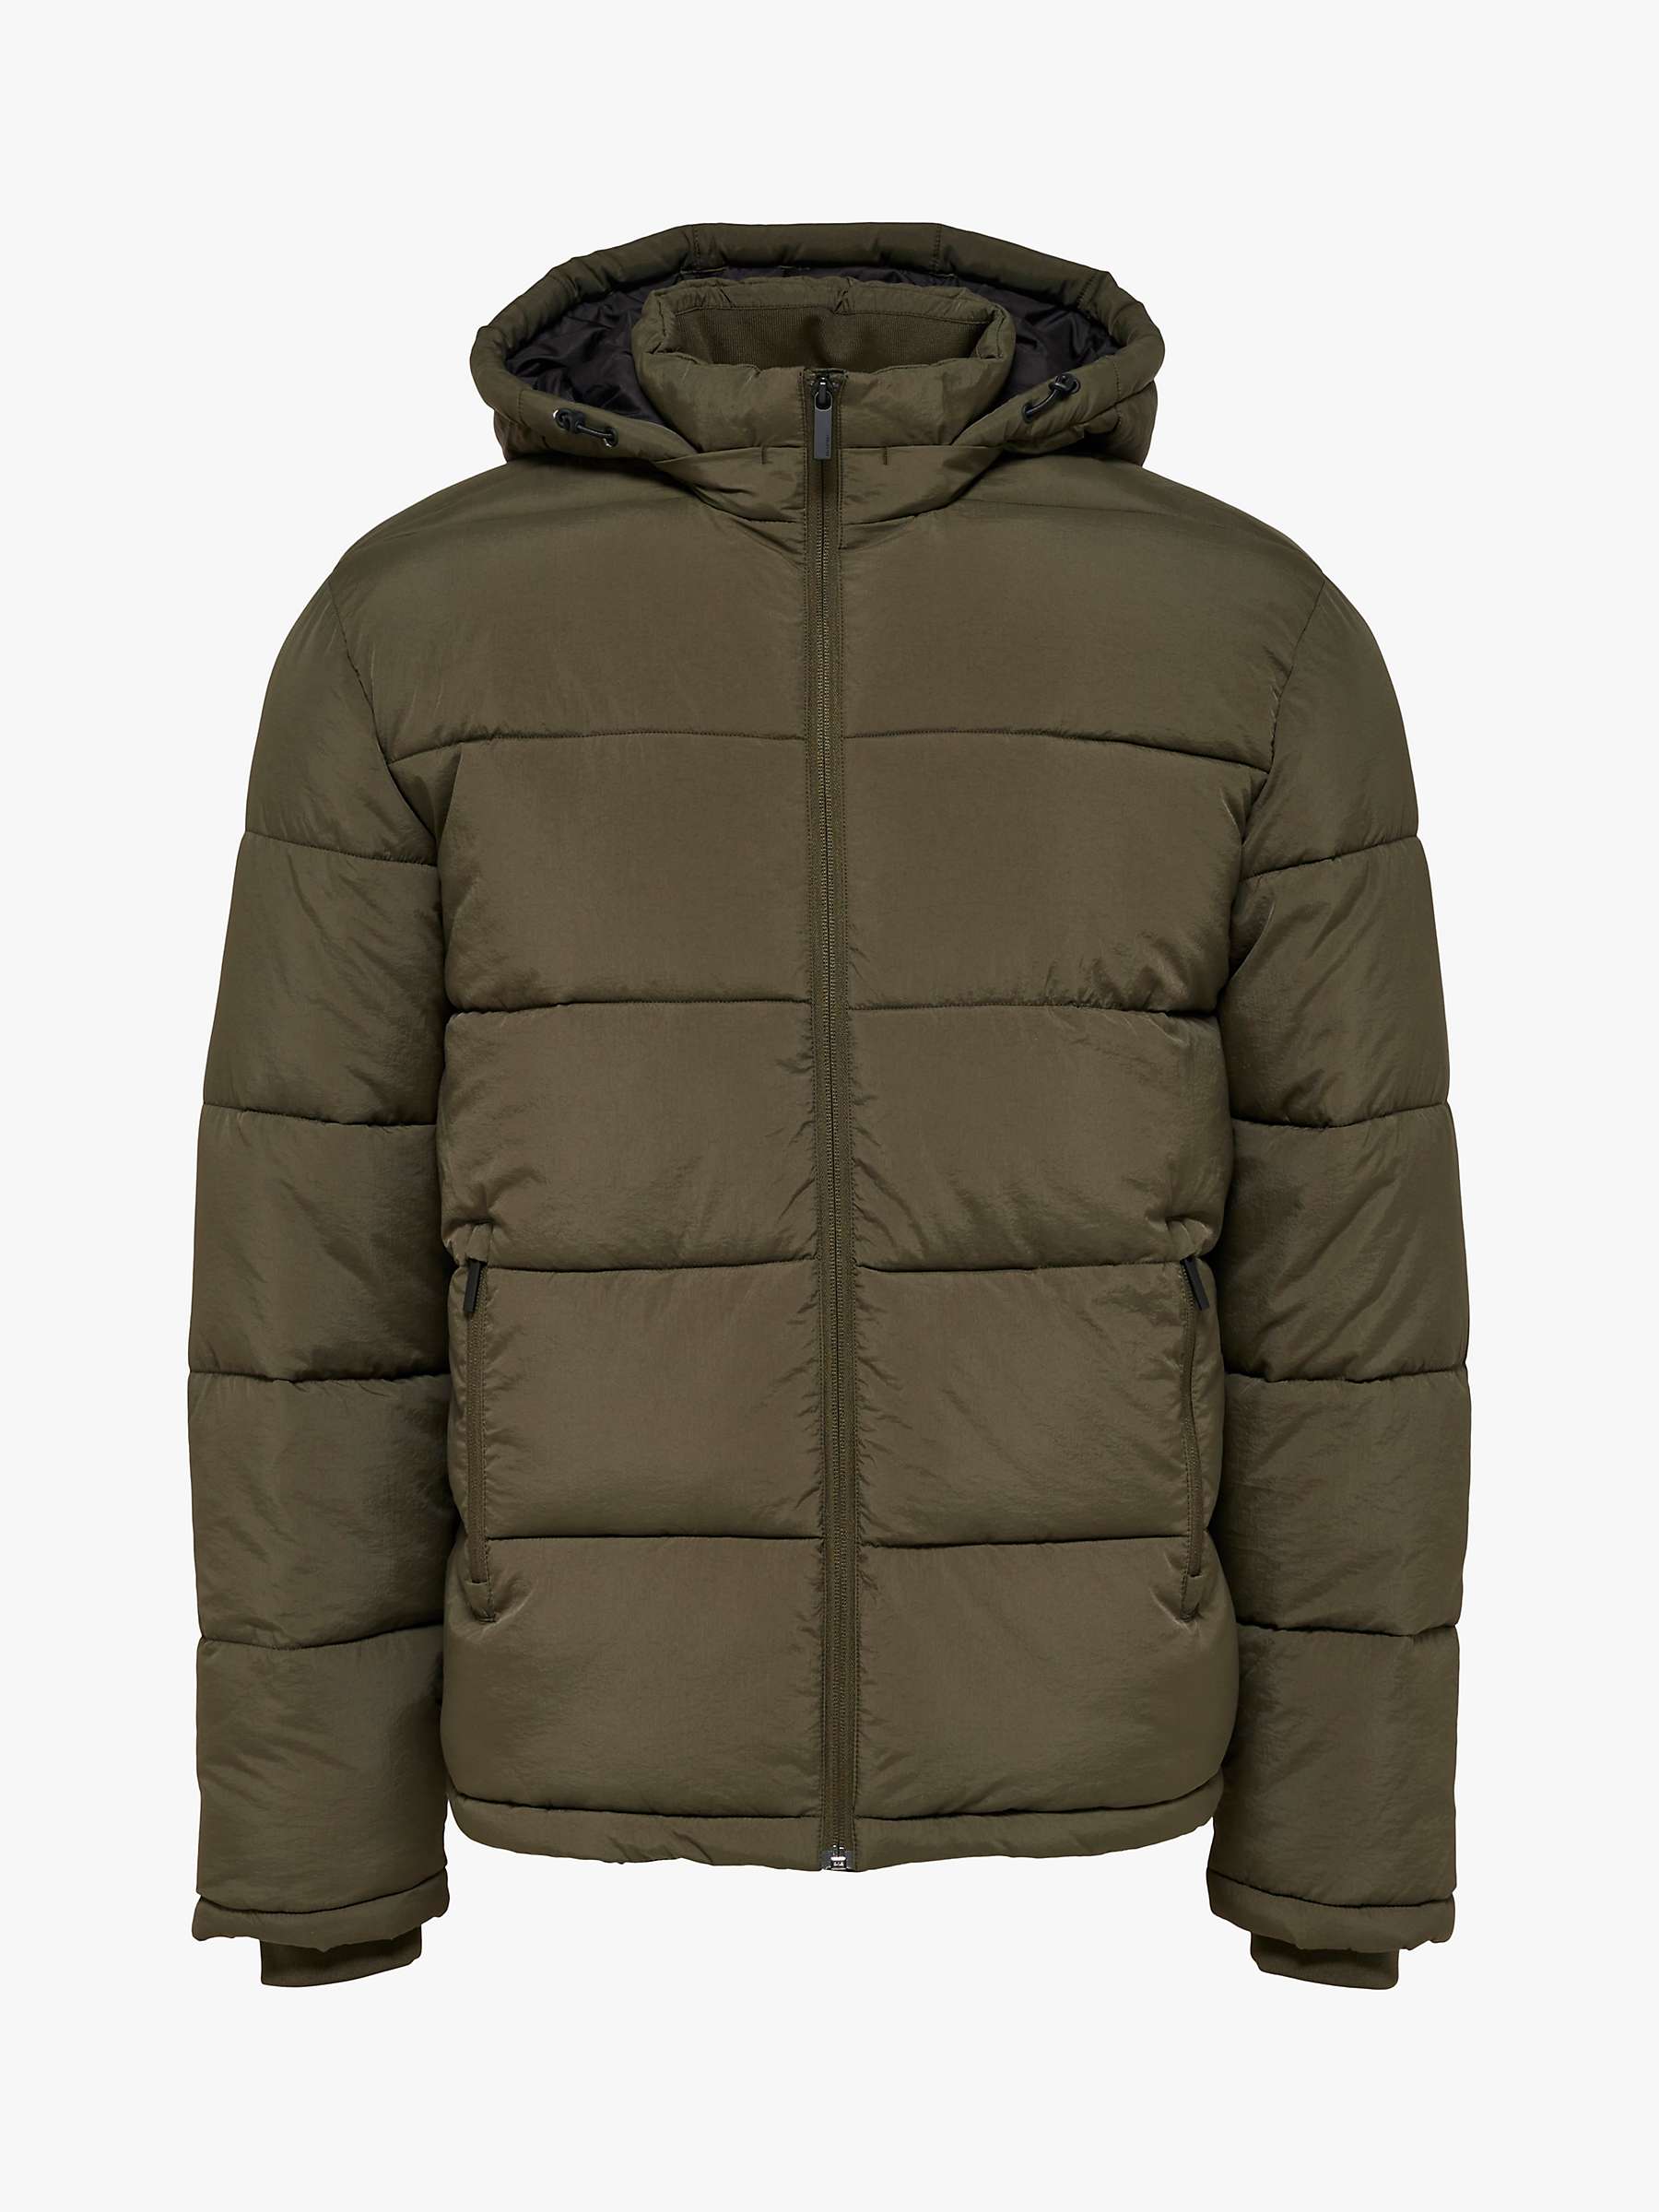 Buy SELECTED HOMME Winter Jacket, Green Online at johnlewis.com